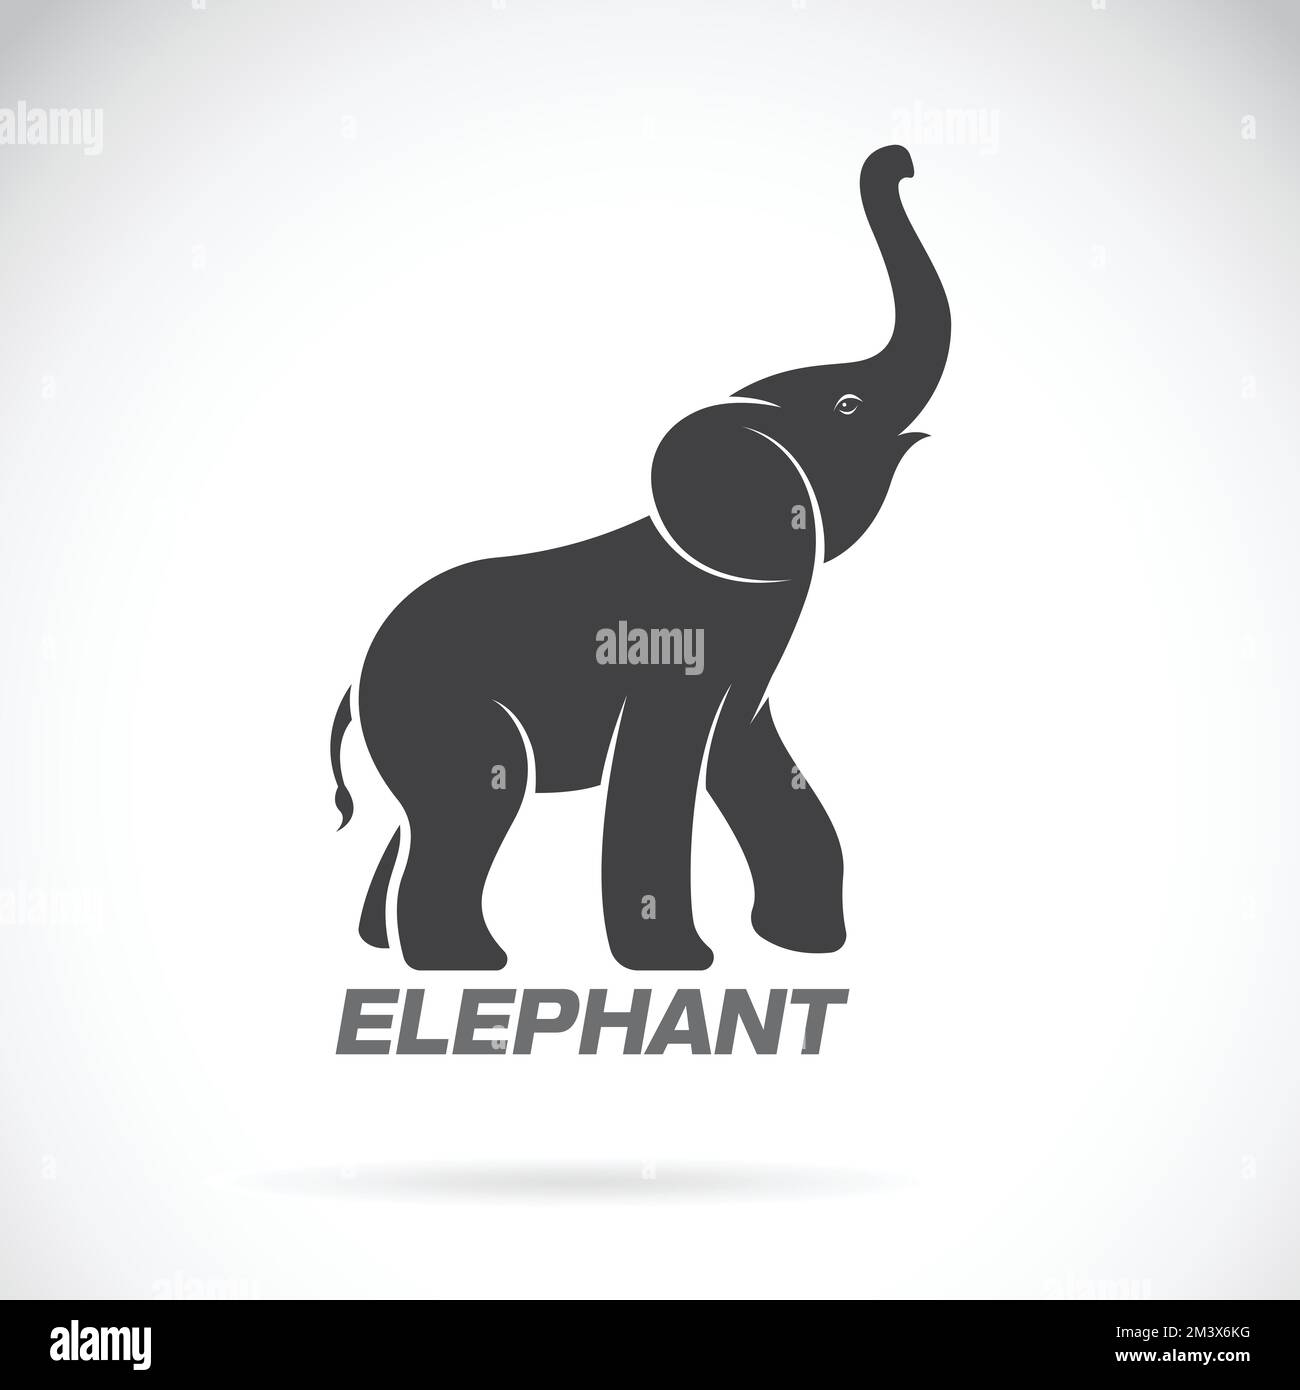 Vector of an elephant design on a white background. Elephant Logo. Easy editable layered vector illustration. Stock Vector